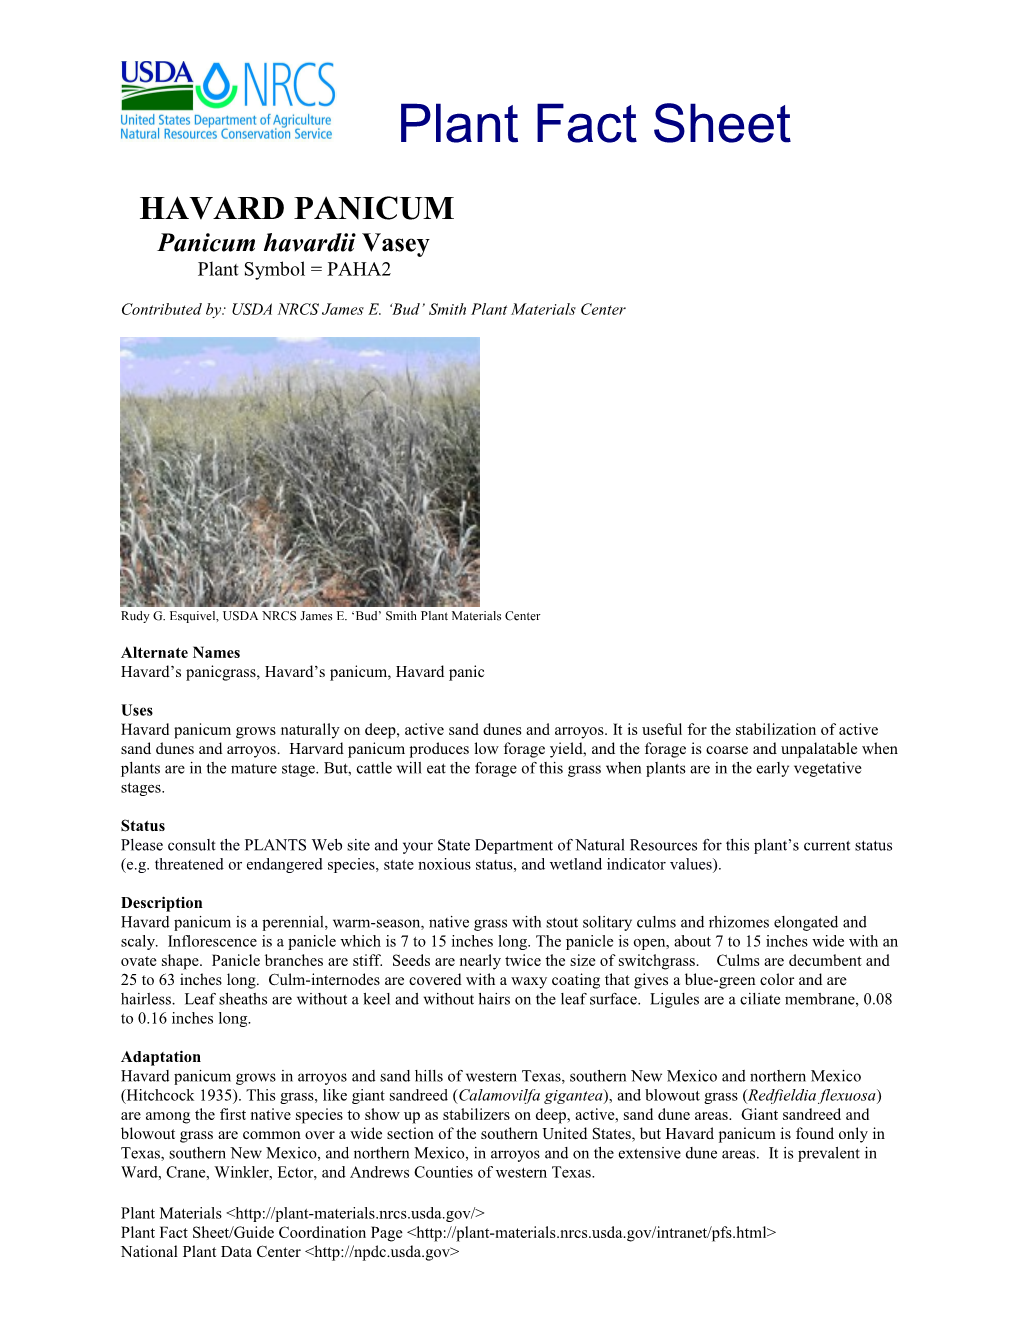 Havard Panicum Plant Fact Sheet